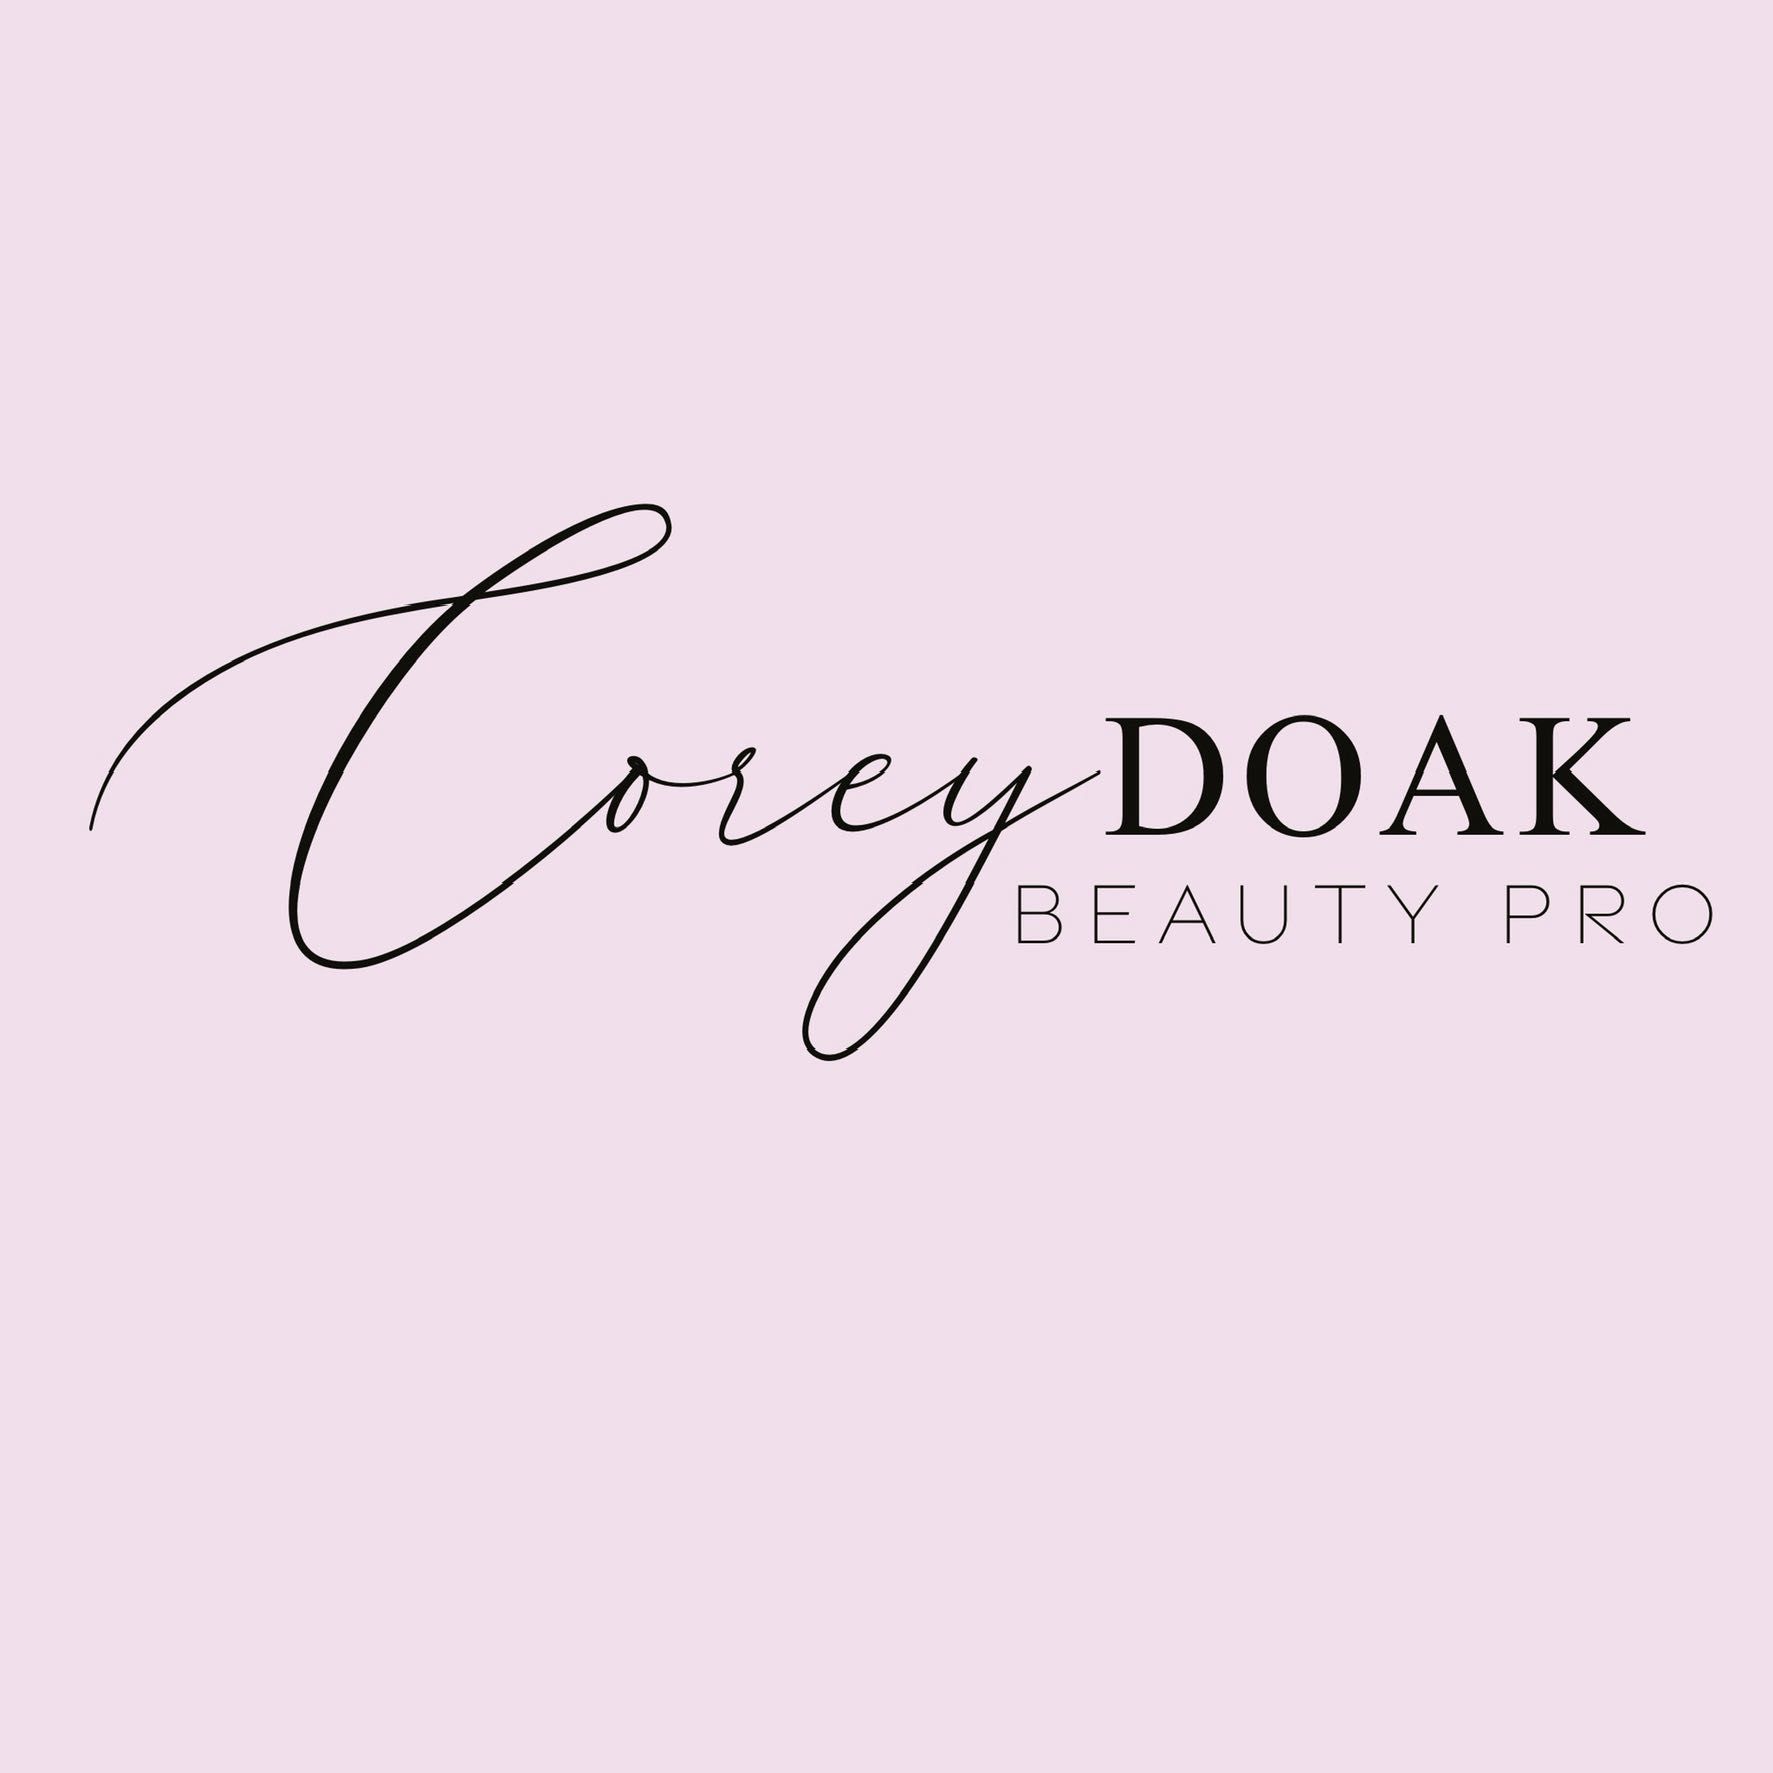 Corey Doak Beauty Pro, 215 Clonmeen, Drumgor, BT65 4AR, Craigavon